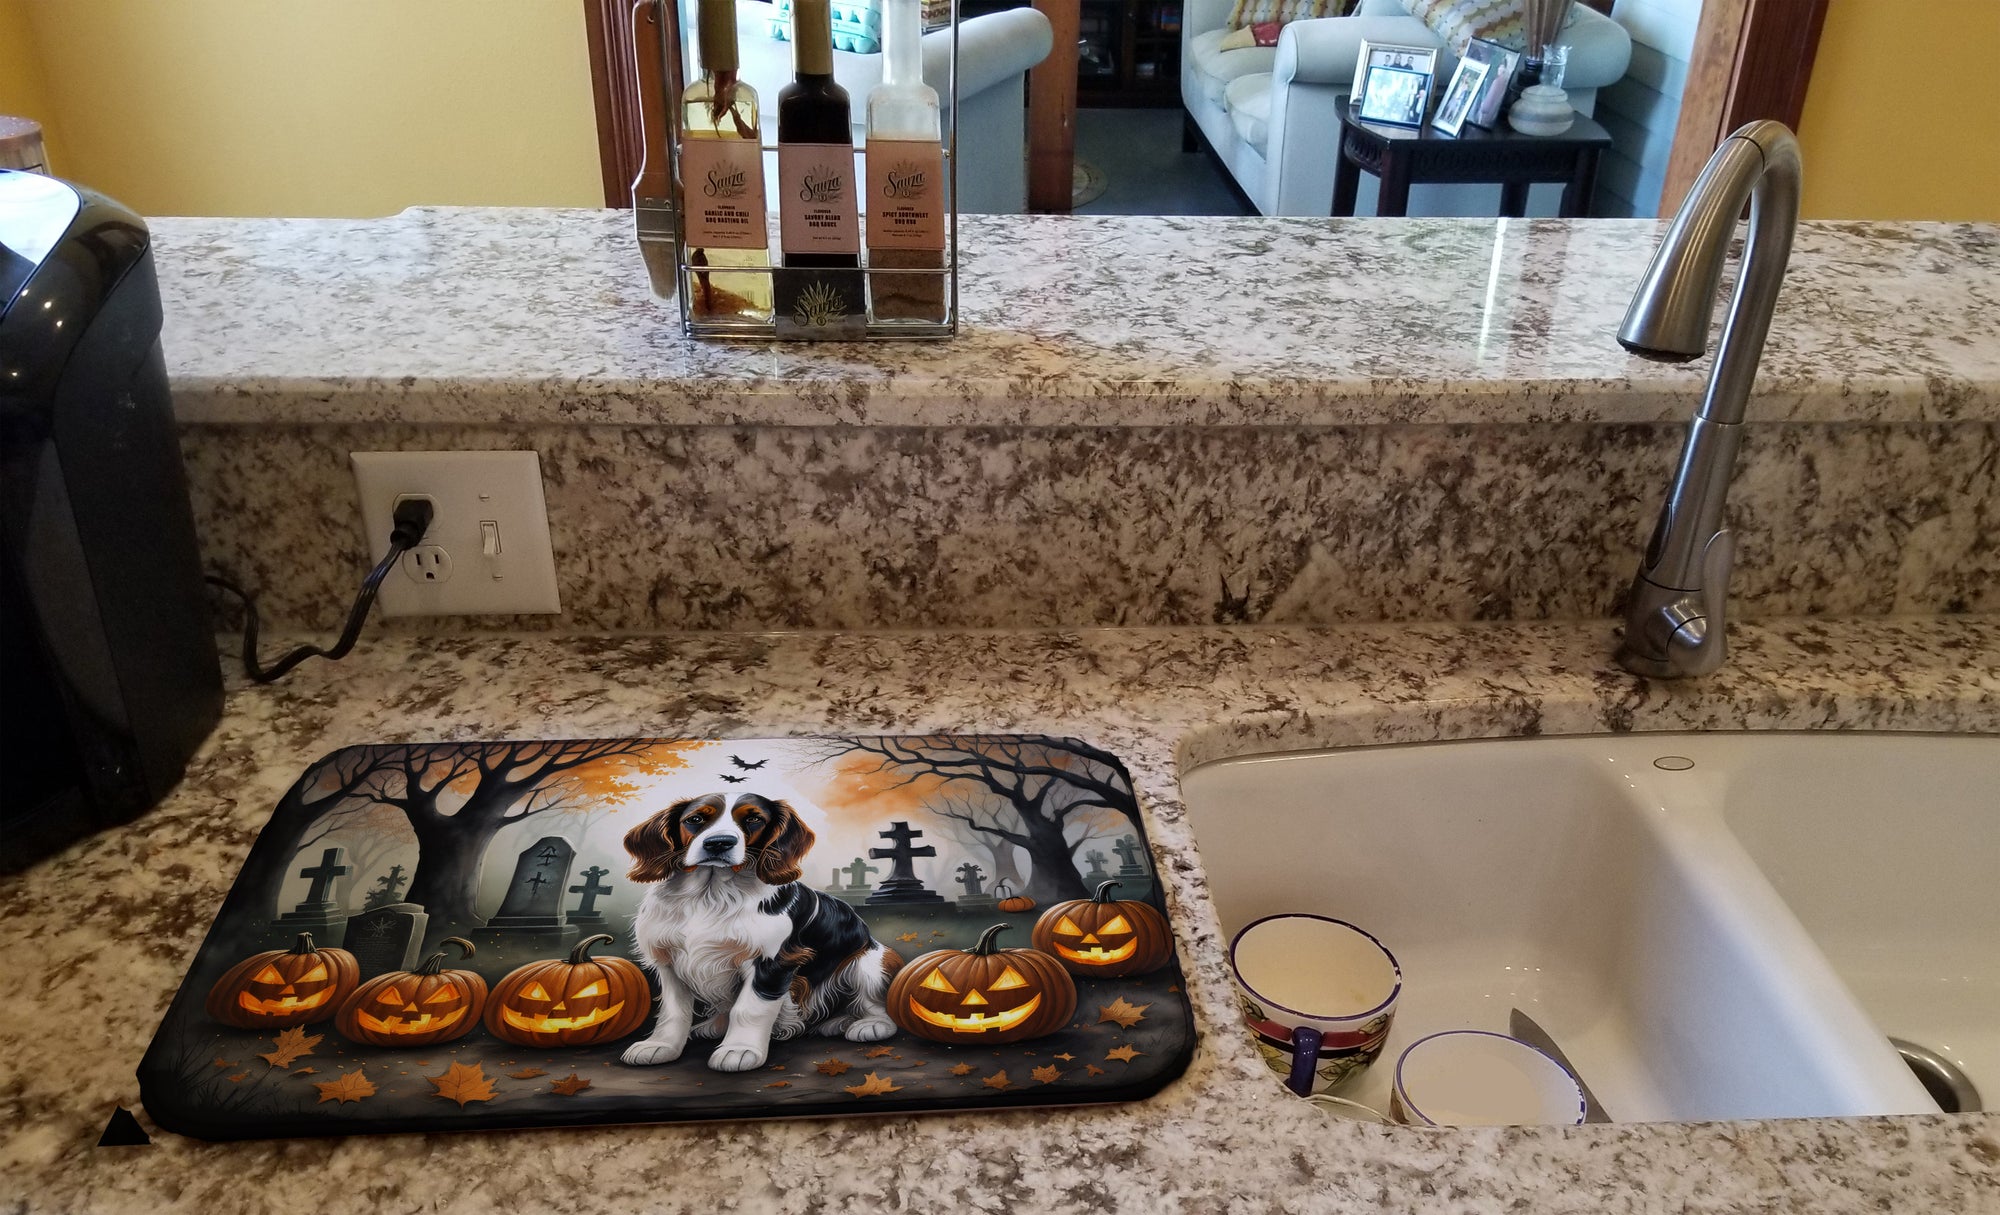 Buy this Welsh Springer Spaniel Spooky Halloween Dish Drying Mat